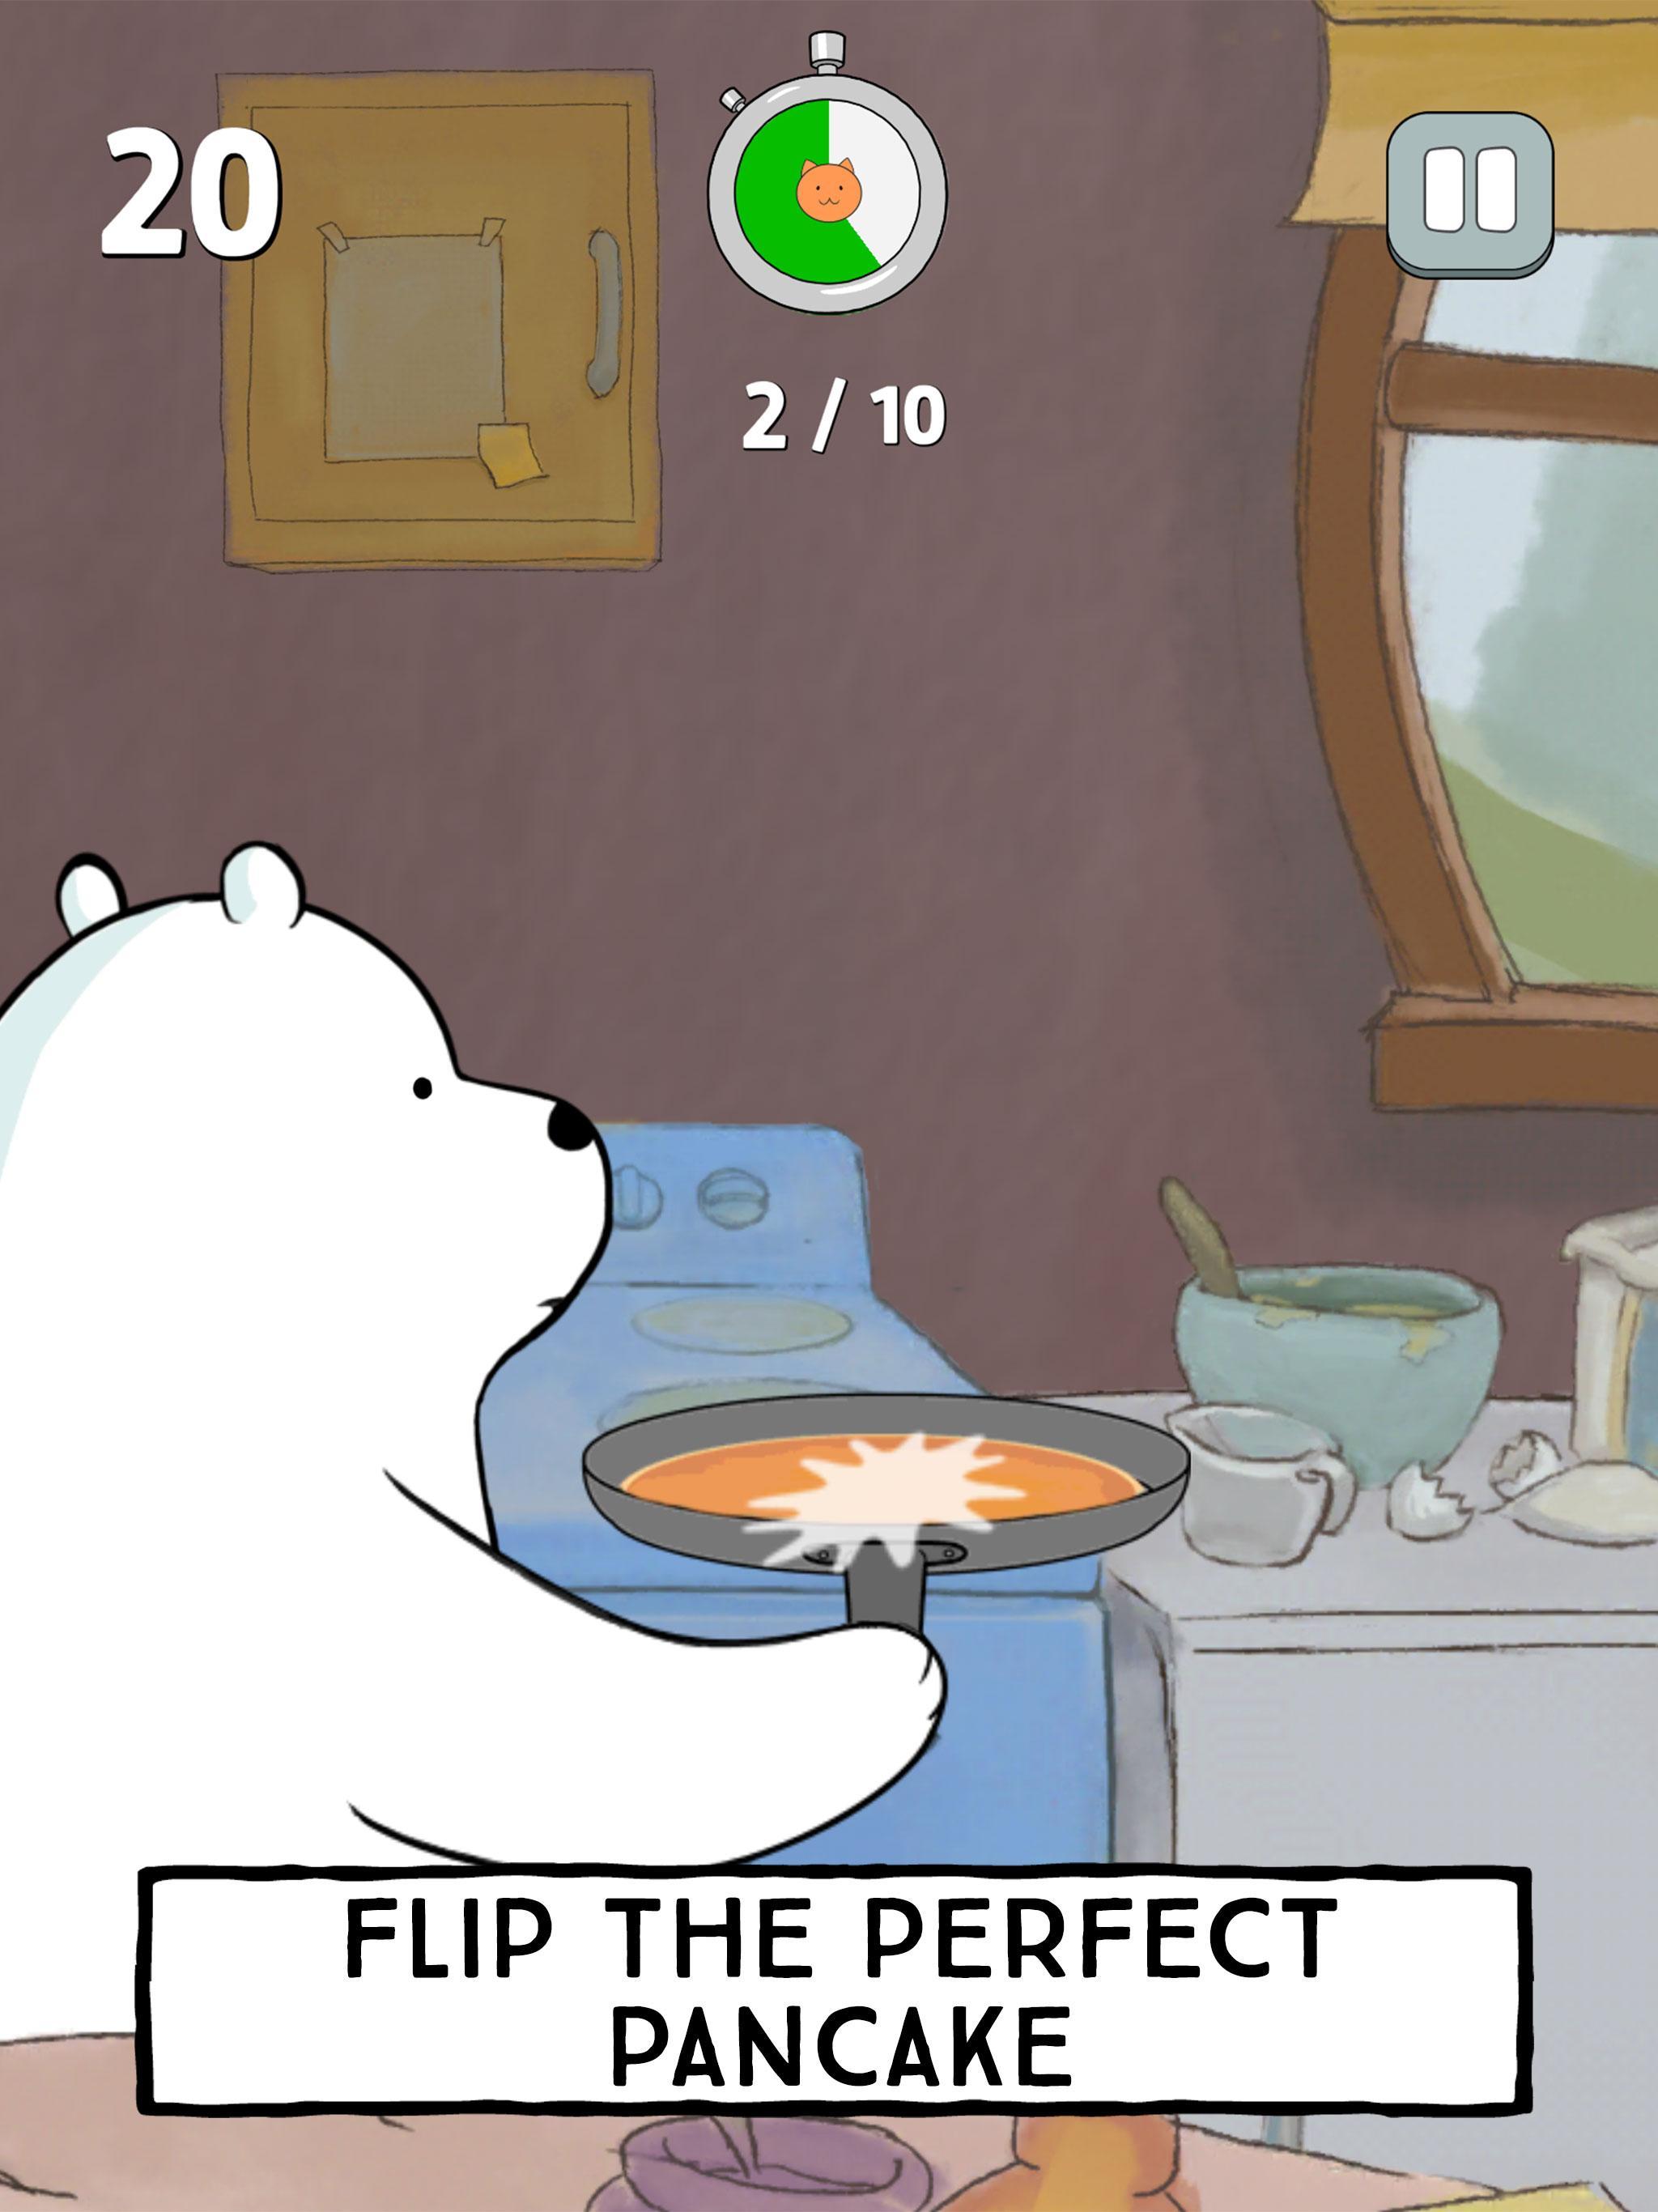 We Bare Bears - Free Fur All: Mini Game Arcade 1.0.1 Screenshot 17